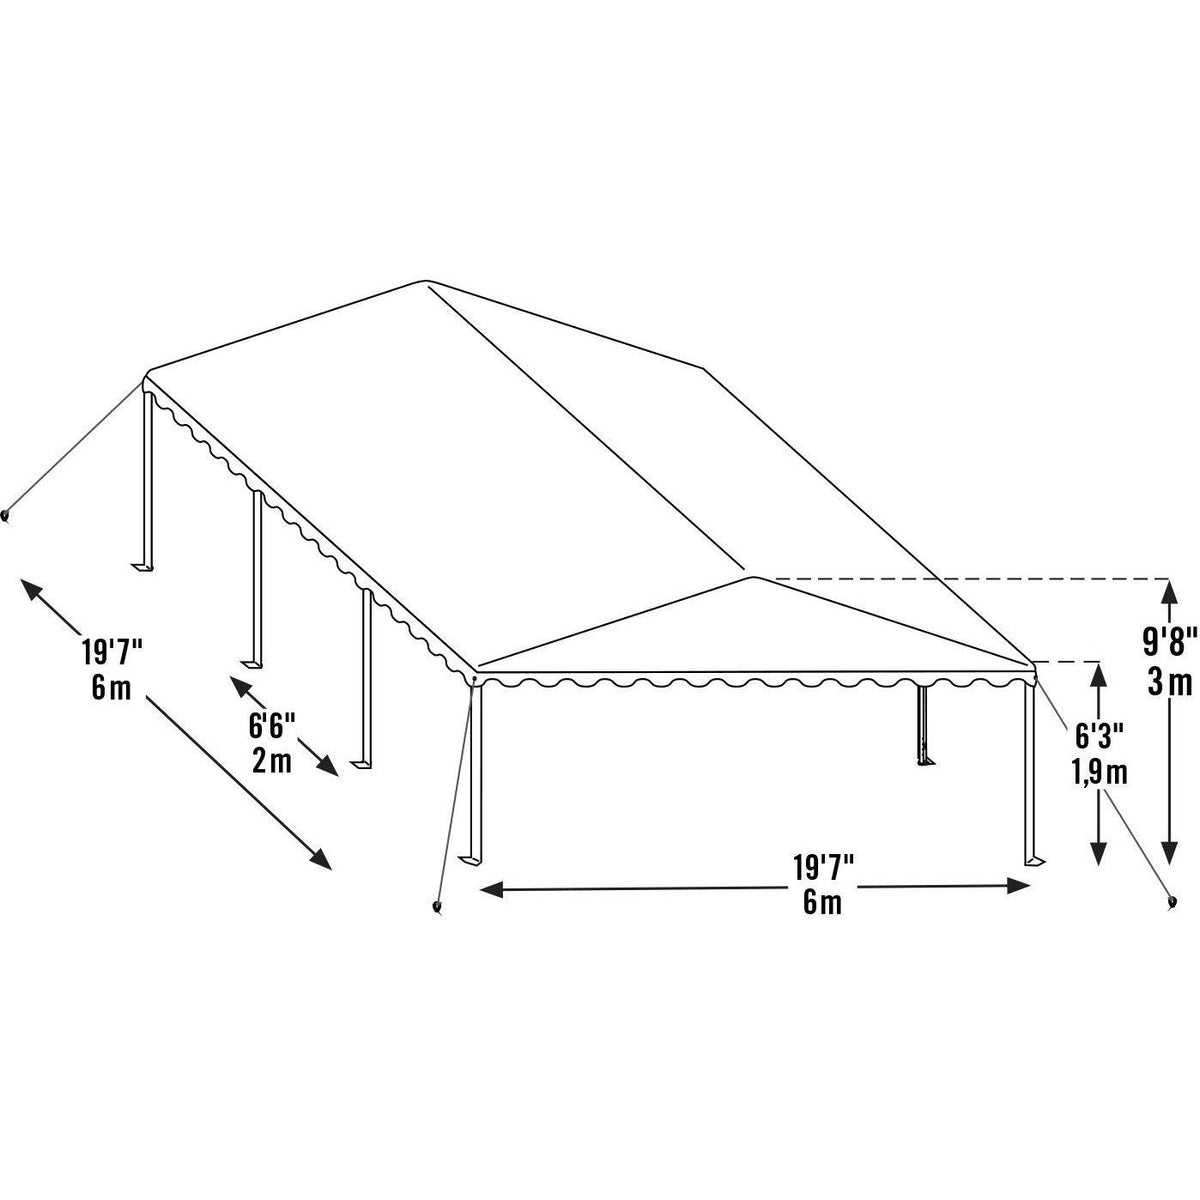 ShelterLogic Party Tent, Green/White, 20 x 20 ft.